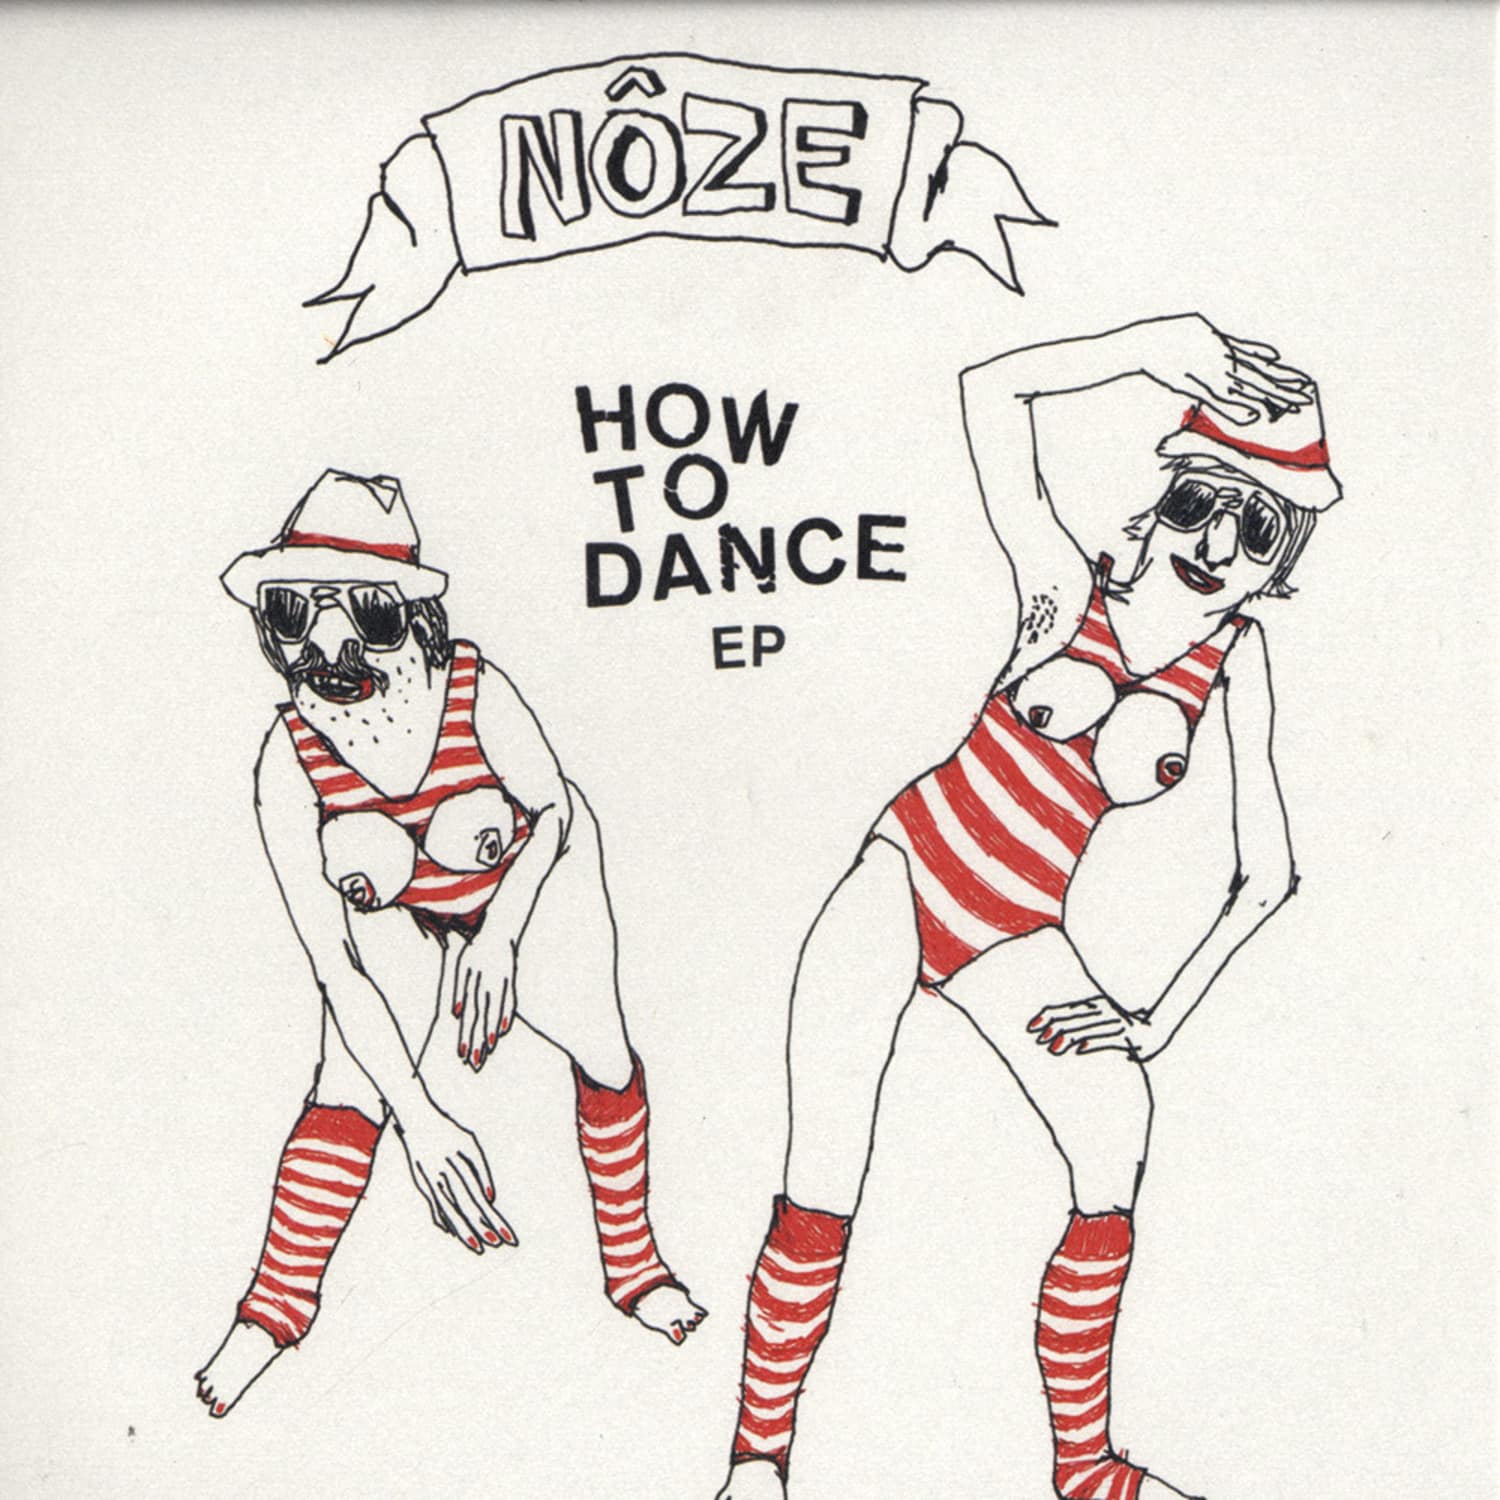 Noze - HOW TO DANCE EP